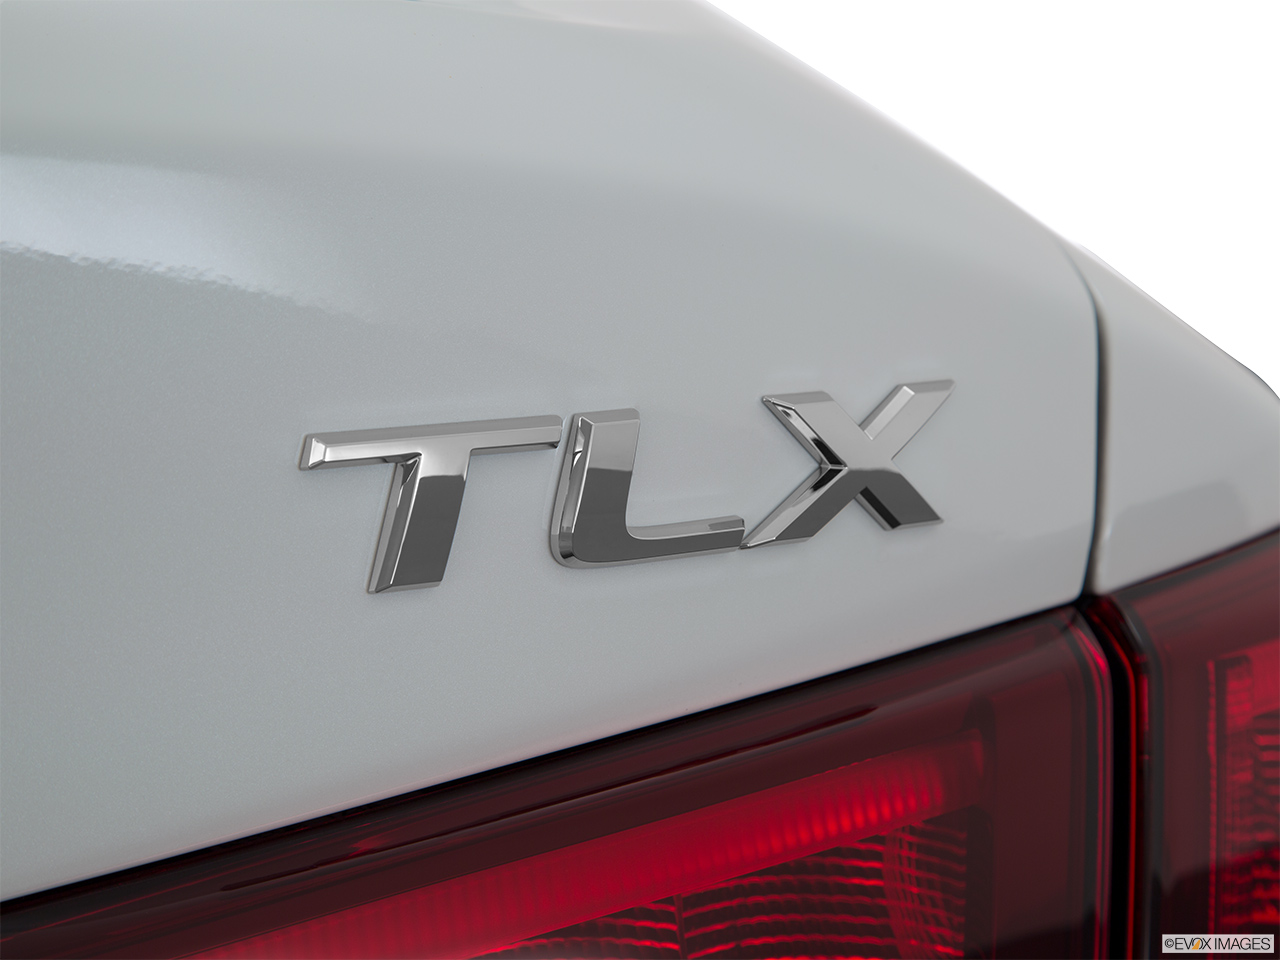 2015 Acura TLX 3.5 V-6 9-AT SH-AWD Rear model badge/emblem 